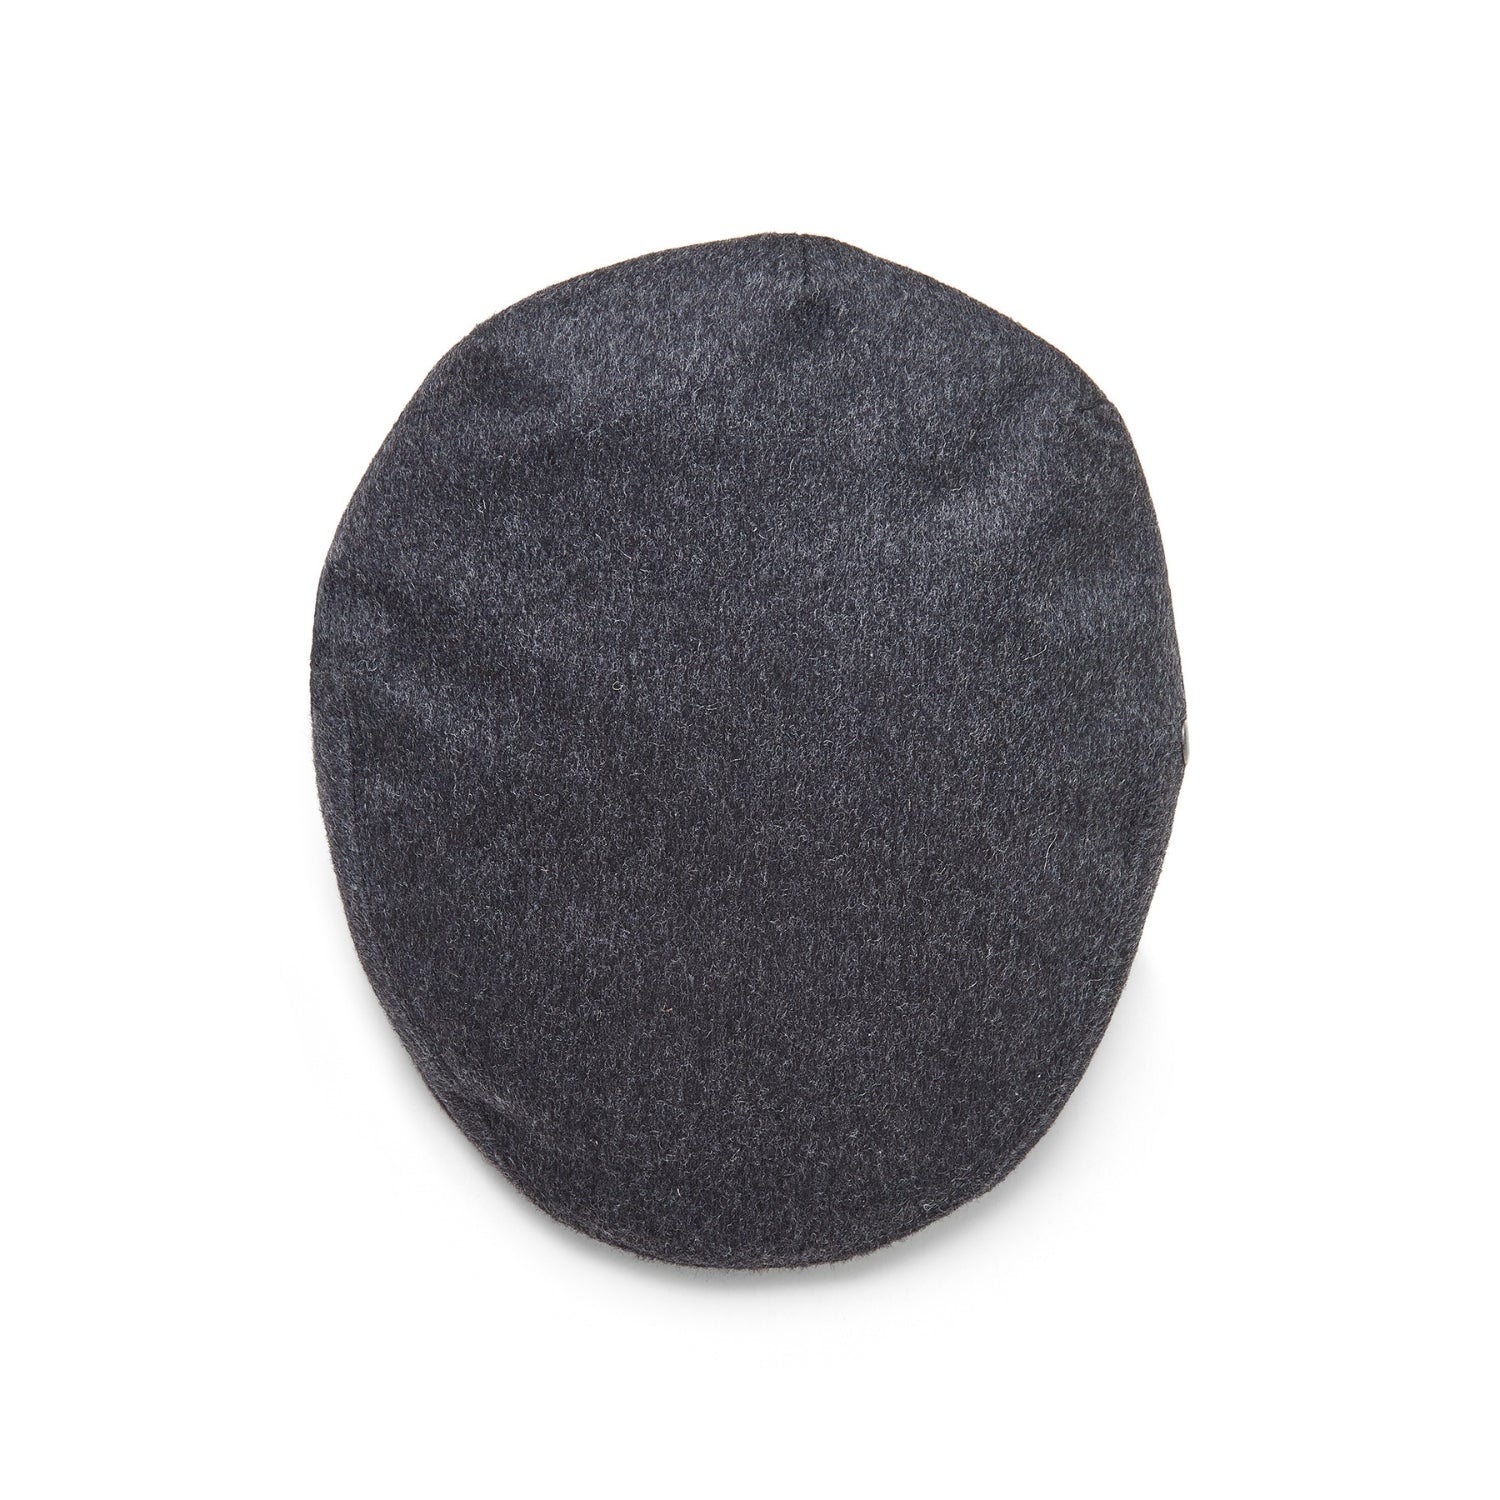 City Sport - Cool Comfort - Loden Wool Flat Cap - Charcoal Grey 1541